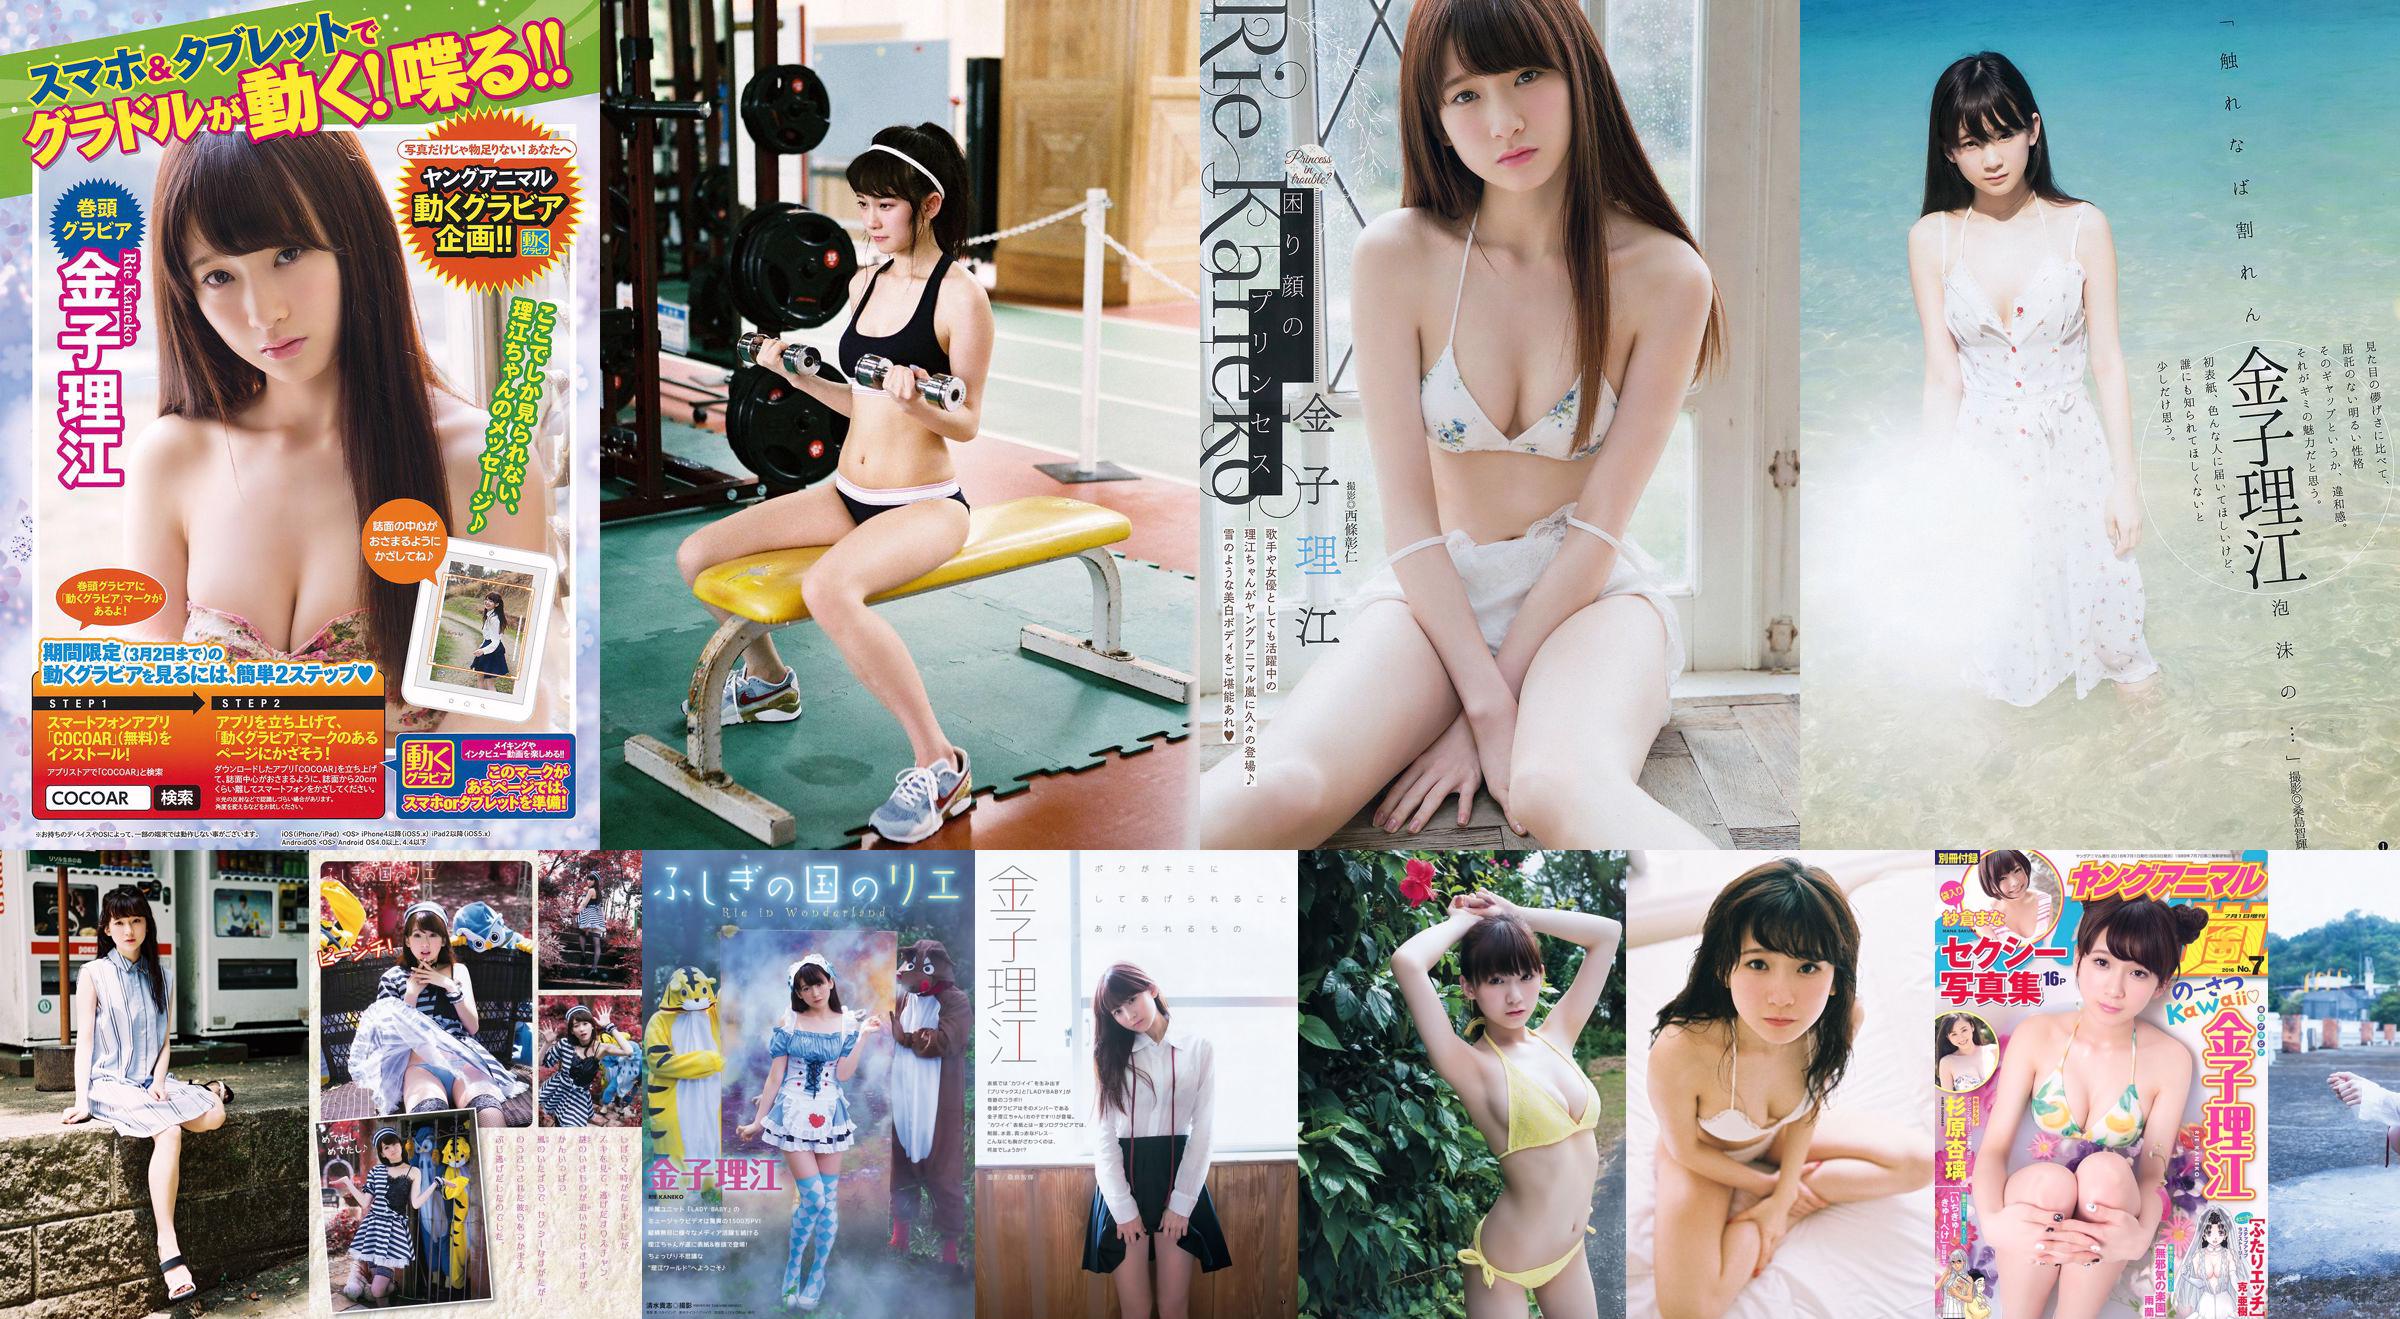 Rie Kaneko, Anri Sugihara, Sakura ま な [Young Animal Arashi Special Issue] Tạp chí ảnh số 07 năm 2016 No.8b6d1e Trang 1